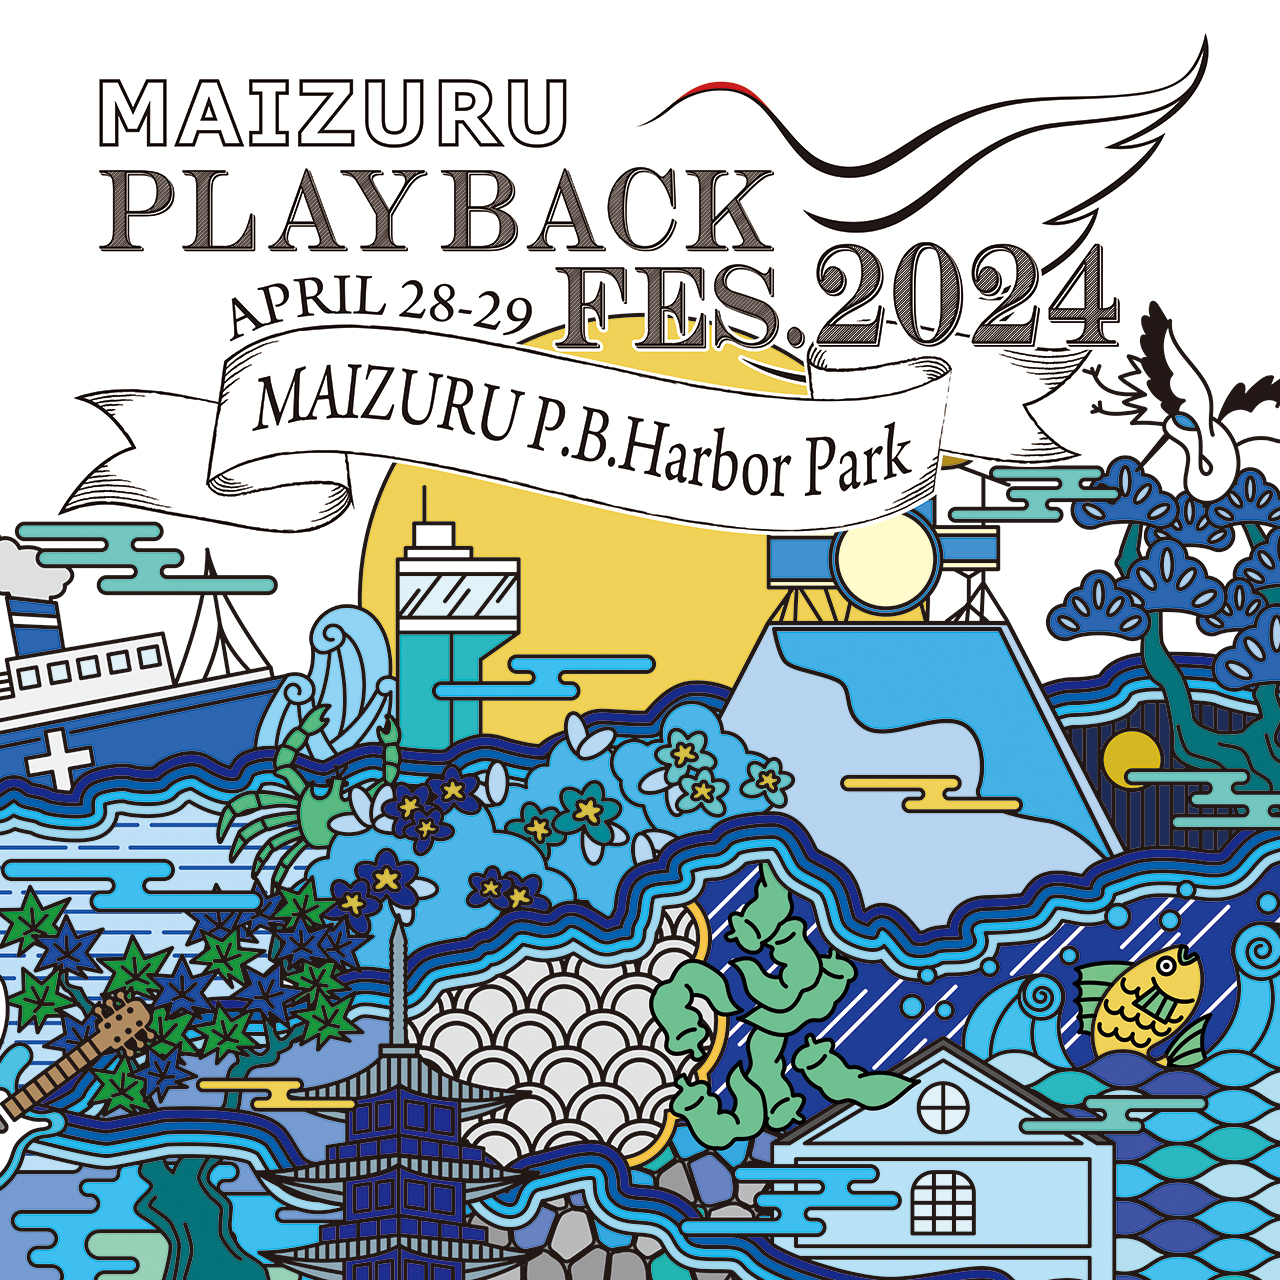 MAIZURU PLAYBACK FES. 2024 Website Open